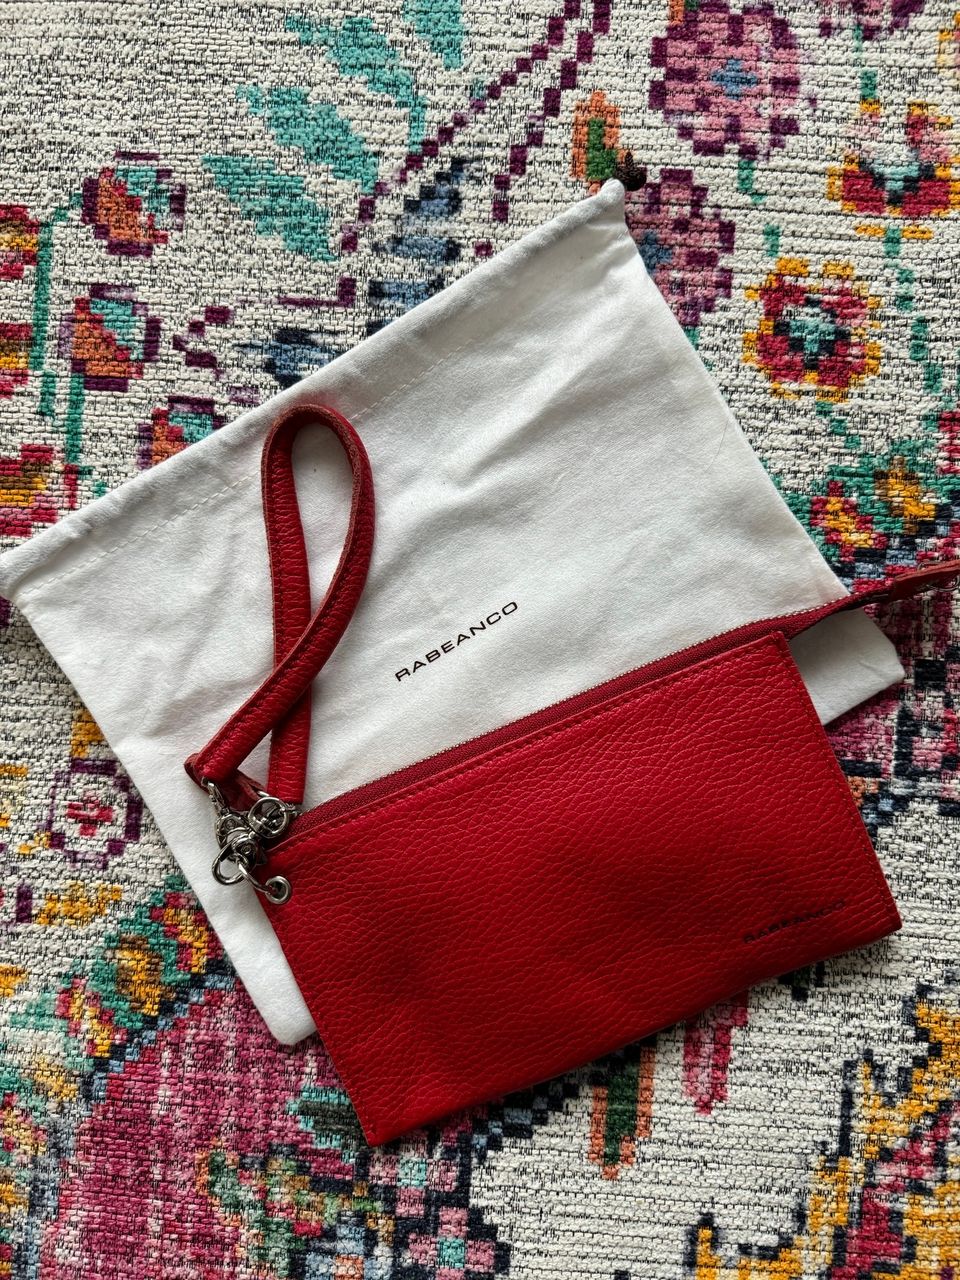 Rabeanco red small bag wristlet